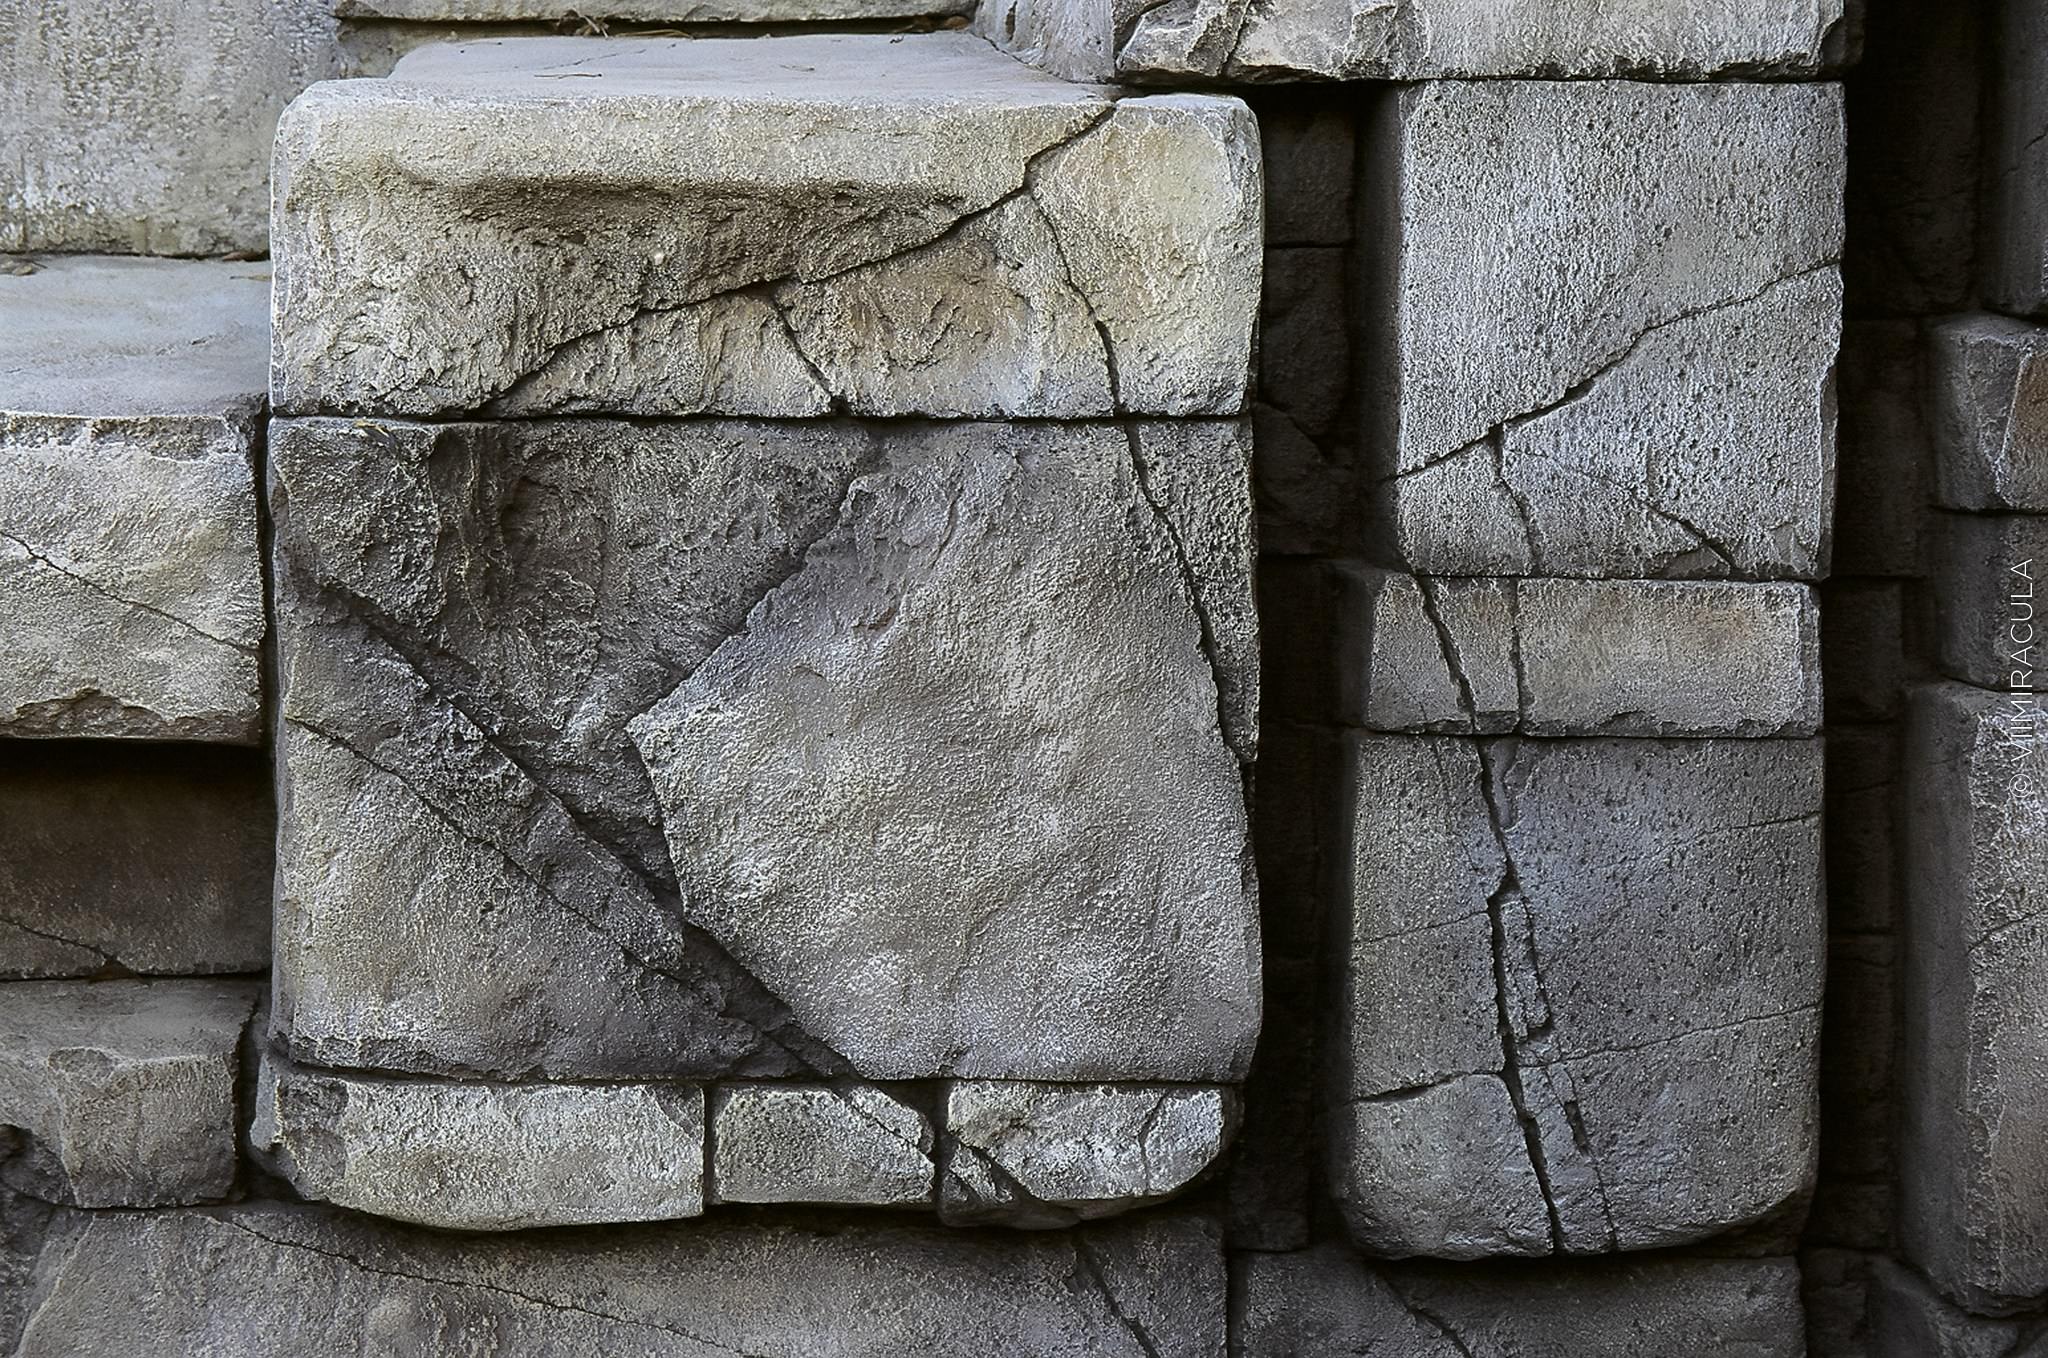 Concrete stone. Артбетон греческий камень. Имитация камня. Имитация дикого камня. Камни из архитектурного бетона.